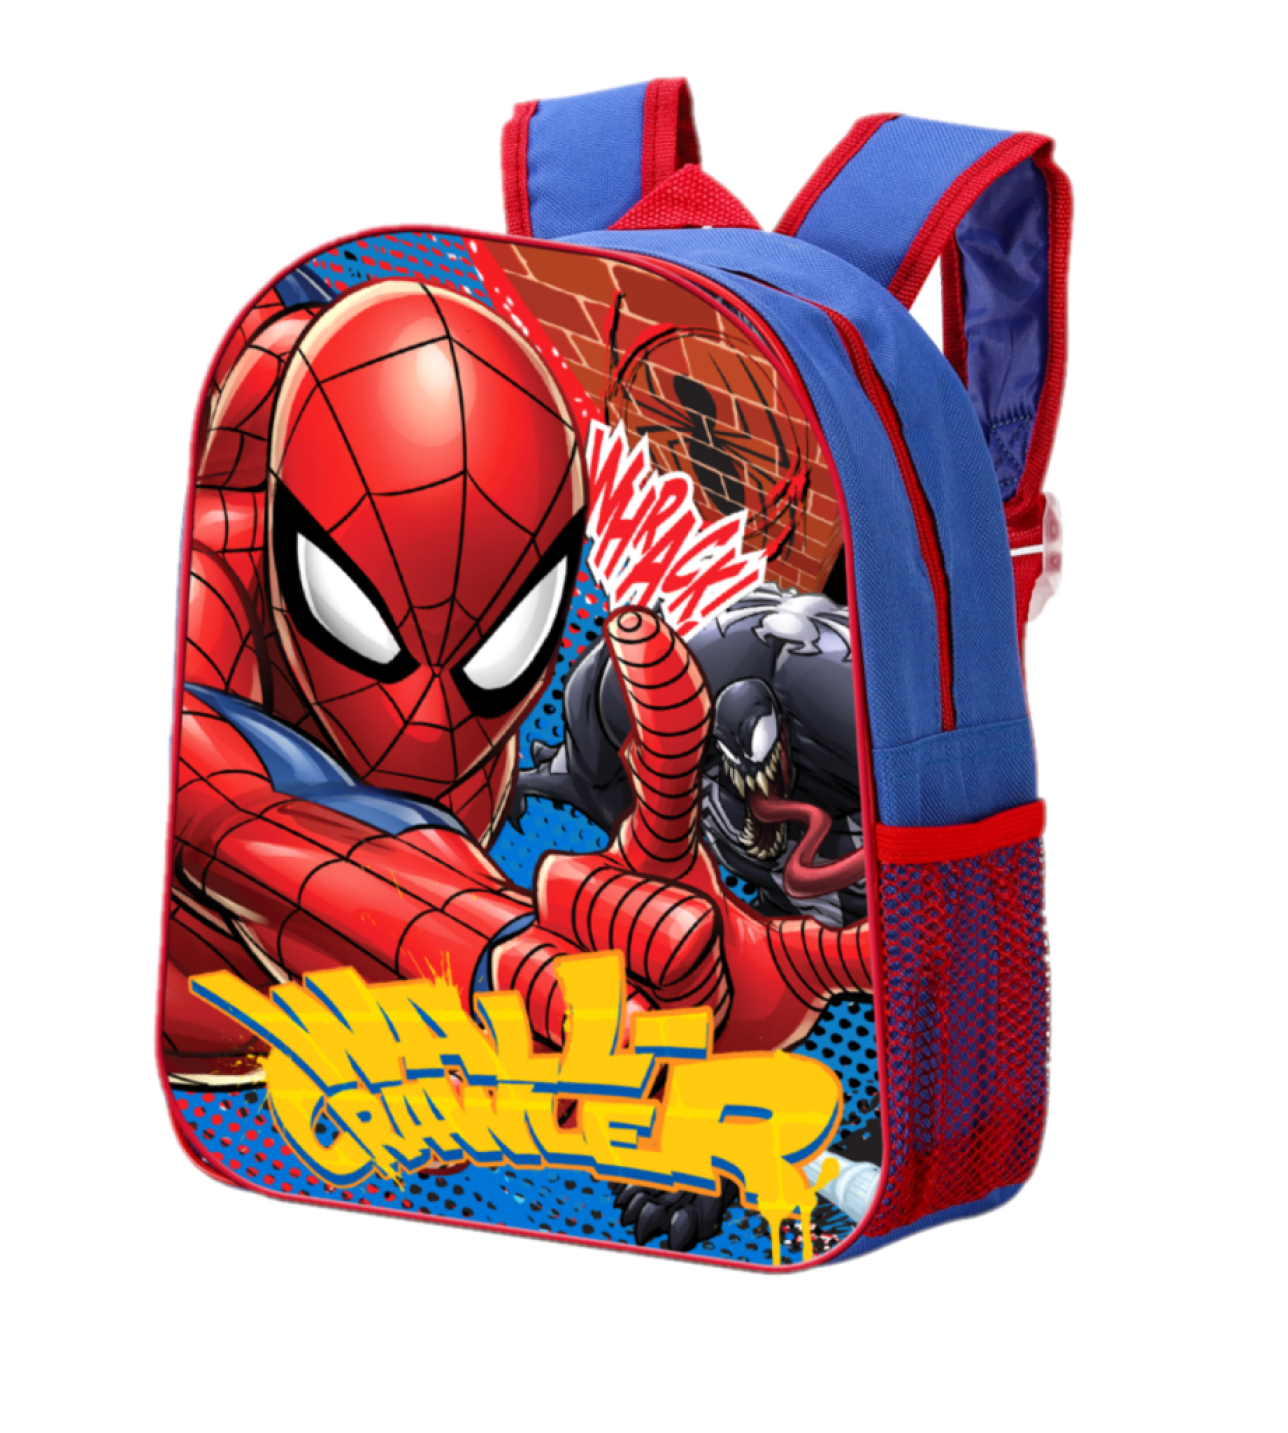 Spiderman Boys Backpack School Bag “Wall Crawler”